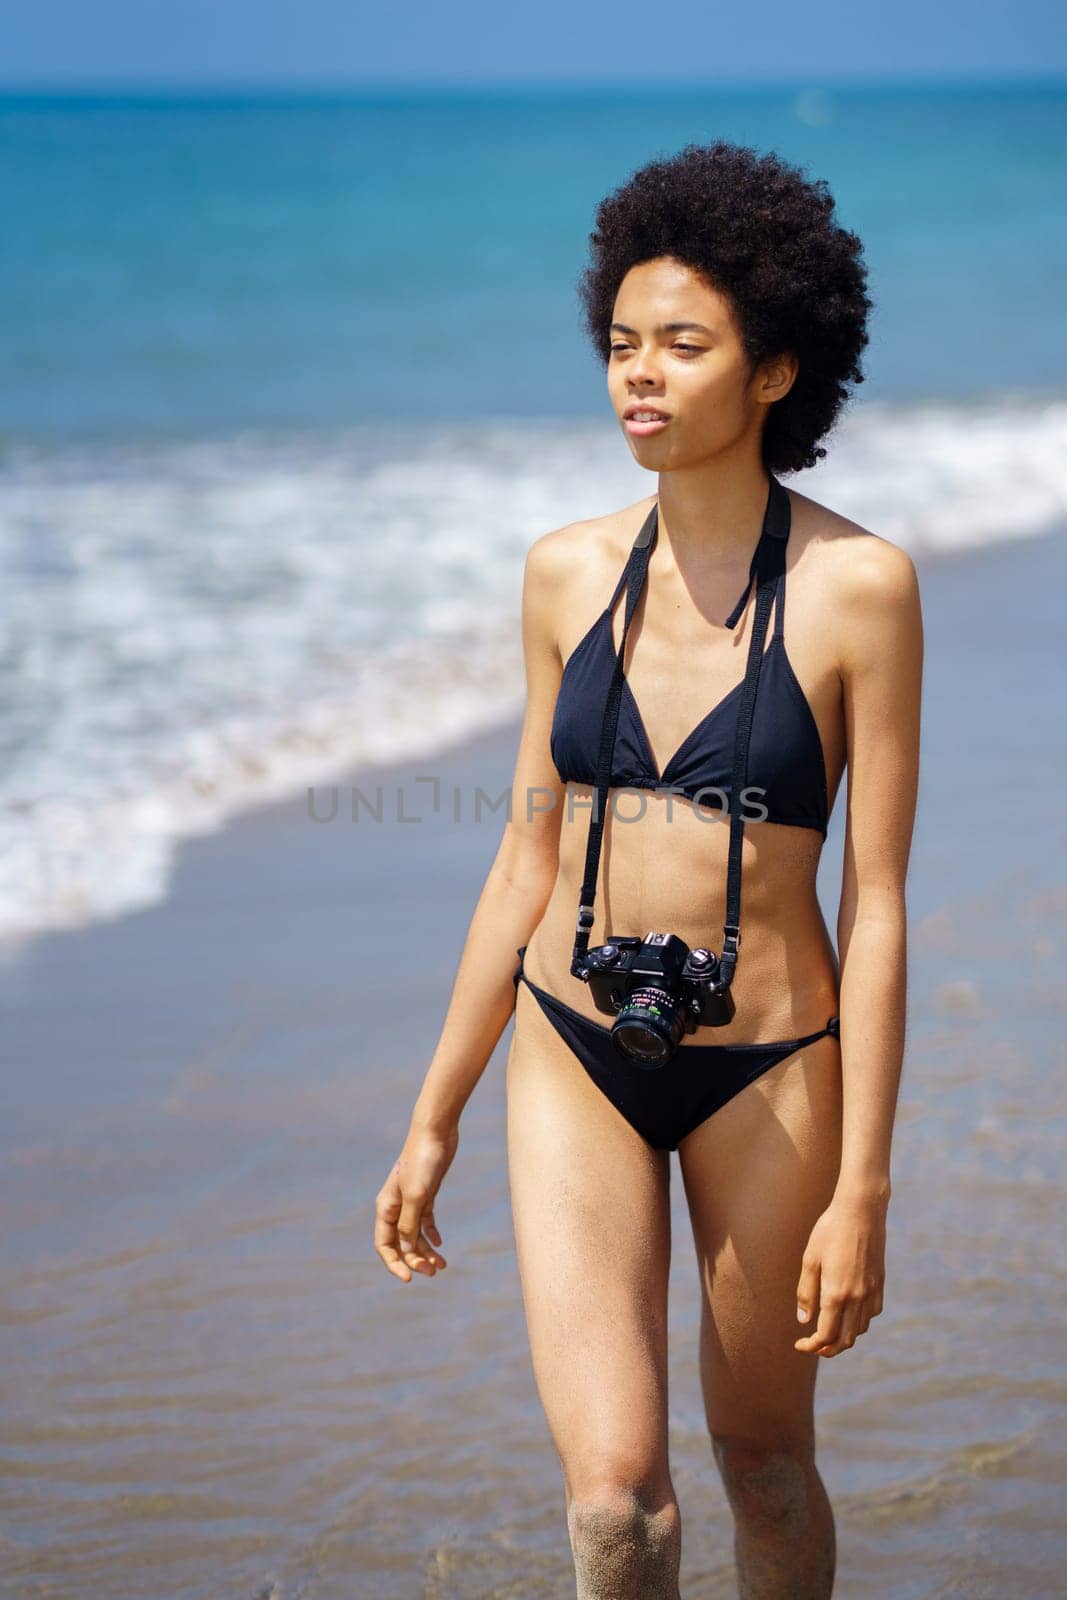 Black woman in bikini with photo camera on seashore by javiindy